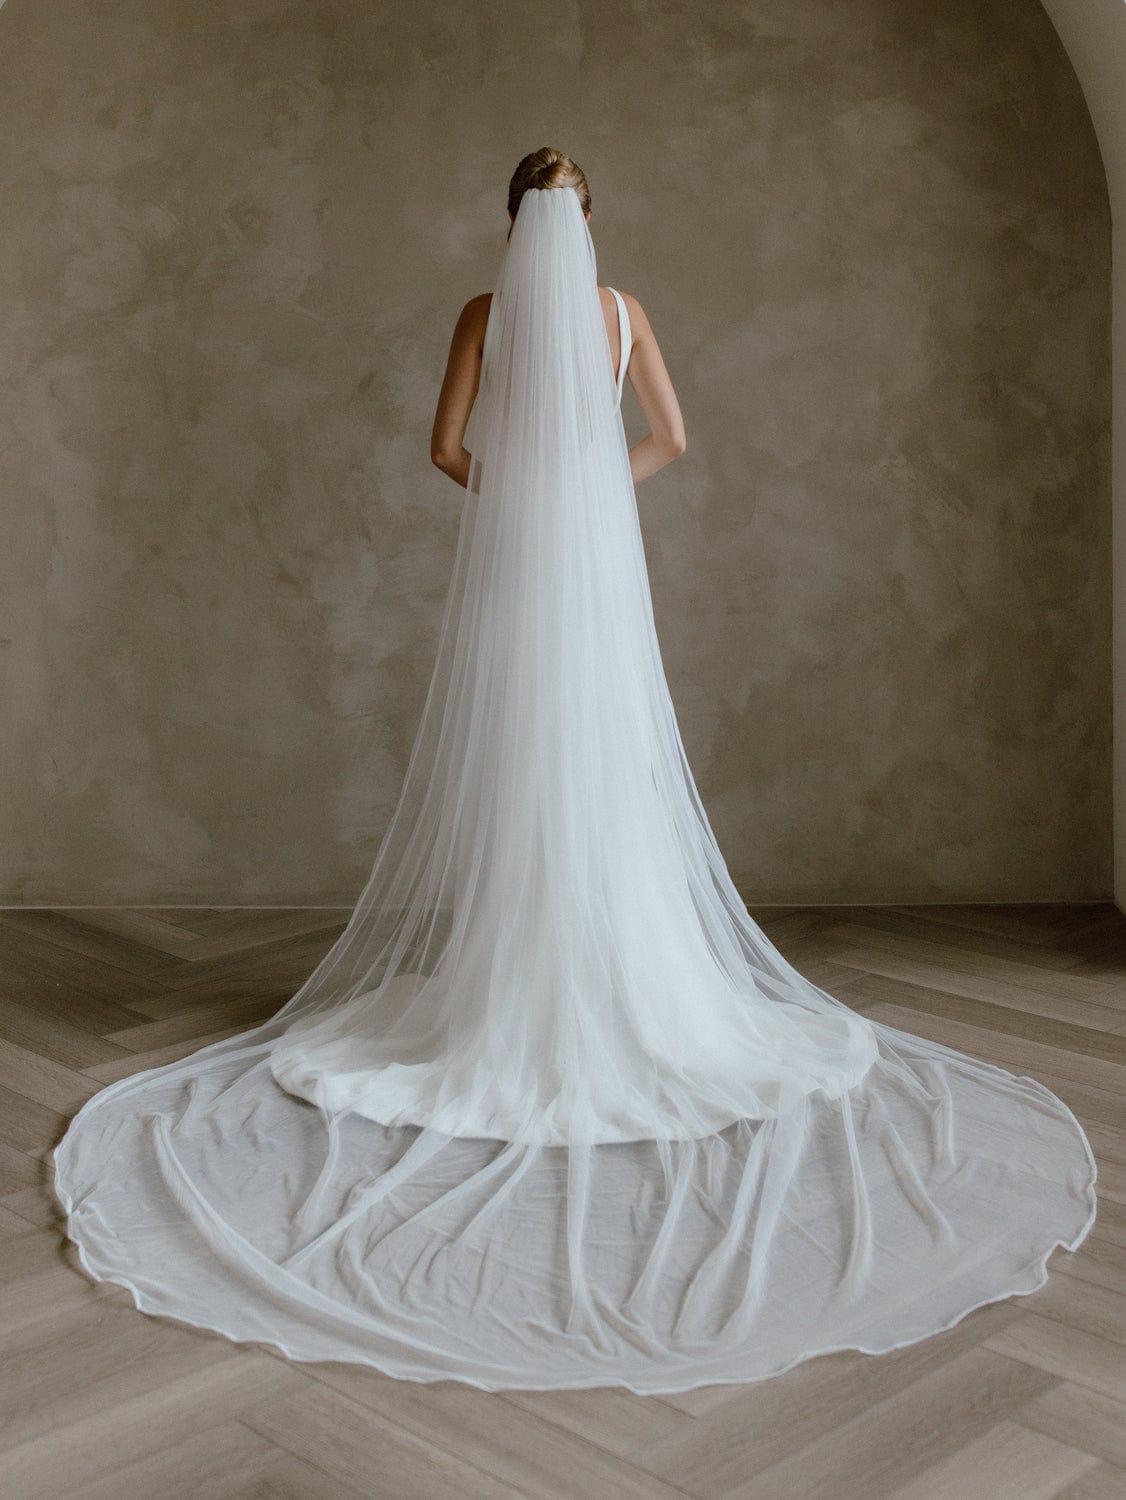 Chic Bridals Wedding Dresses Plain Veil with Organza Trim Danika Lace Dress | Ball Gowns Toronto  Wedding Gowns